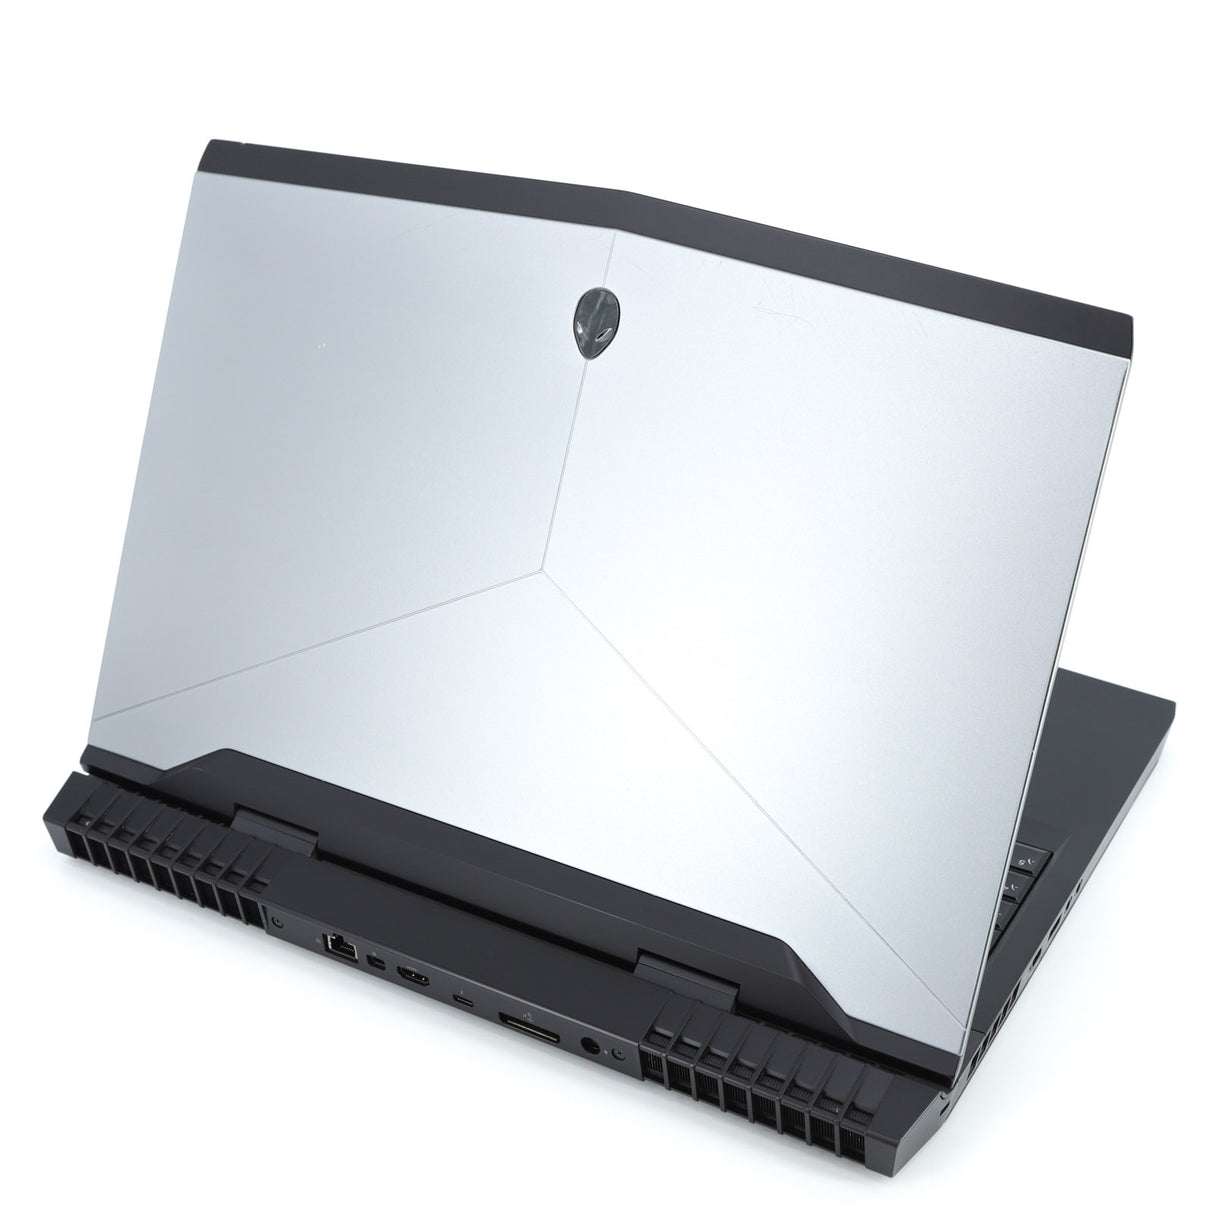 Alienware 17 R4 Gaming Laptop: Core i7 256GB+1TB 32GB, NVIDIA GTX 1080, Warranty - GreenGreen Store